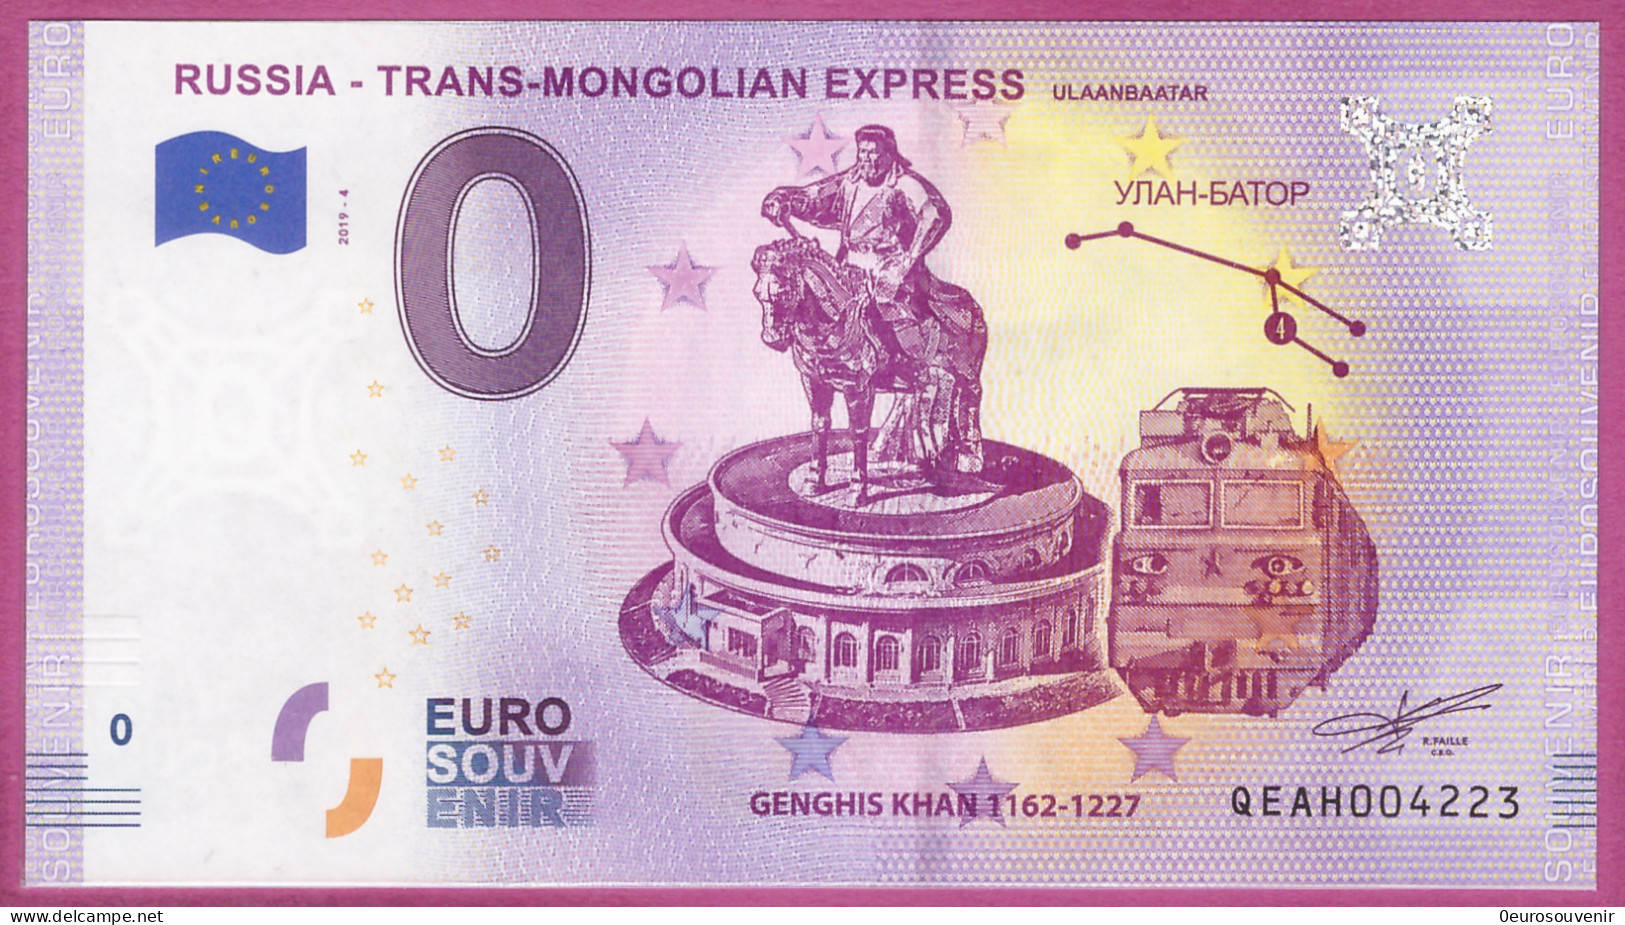 0-Euro QEAH 2019-4 RUSSIA - TRANS-MONGOLIAN EXPRESS ULAANBAATAR - Privatentwürfe